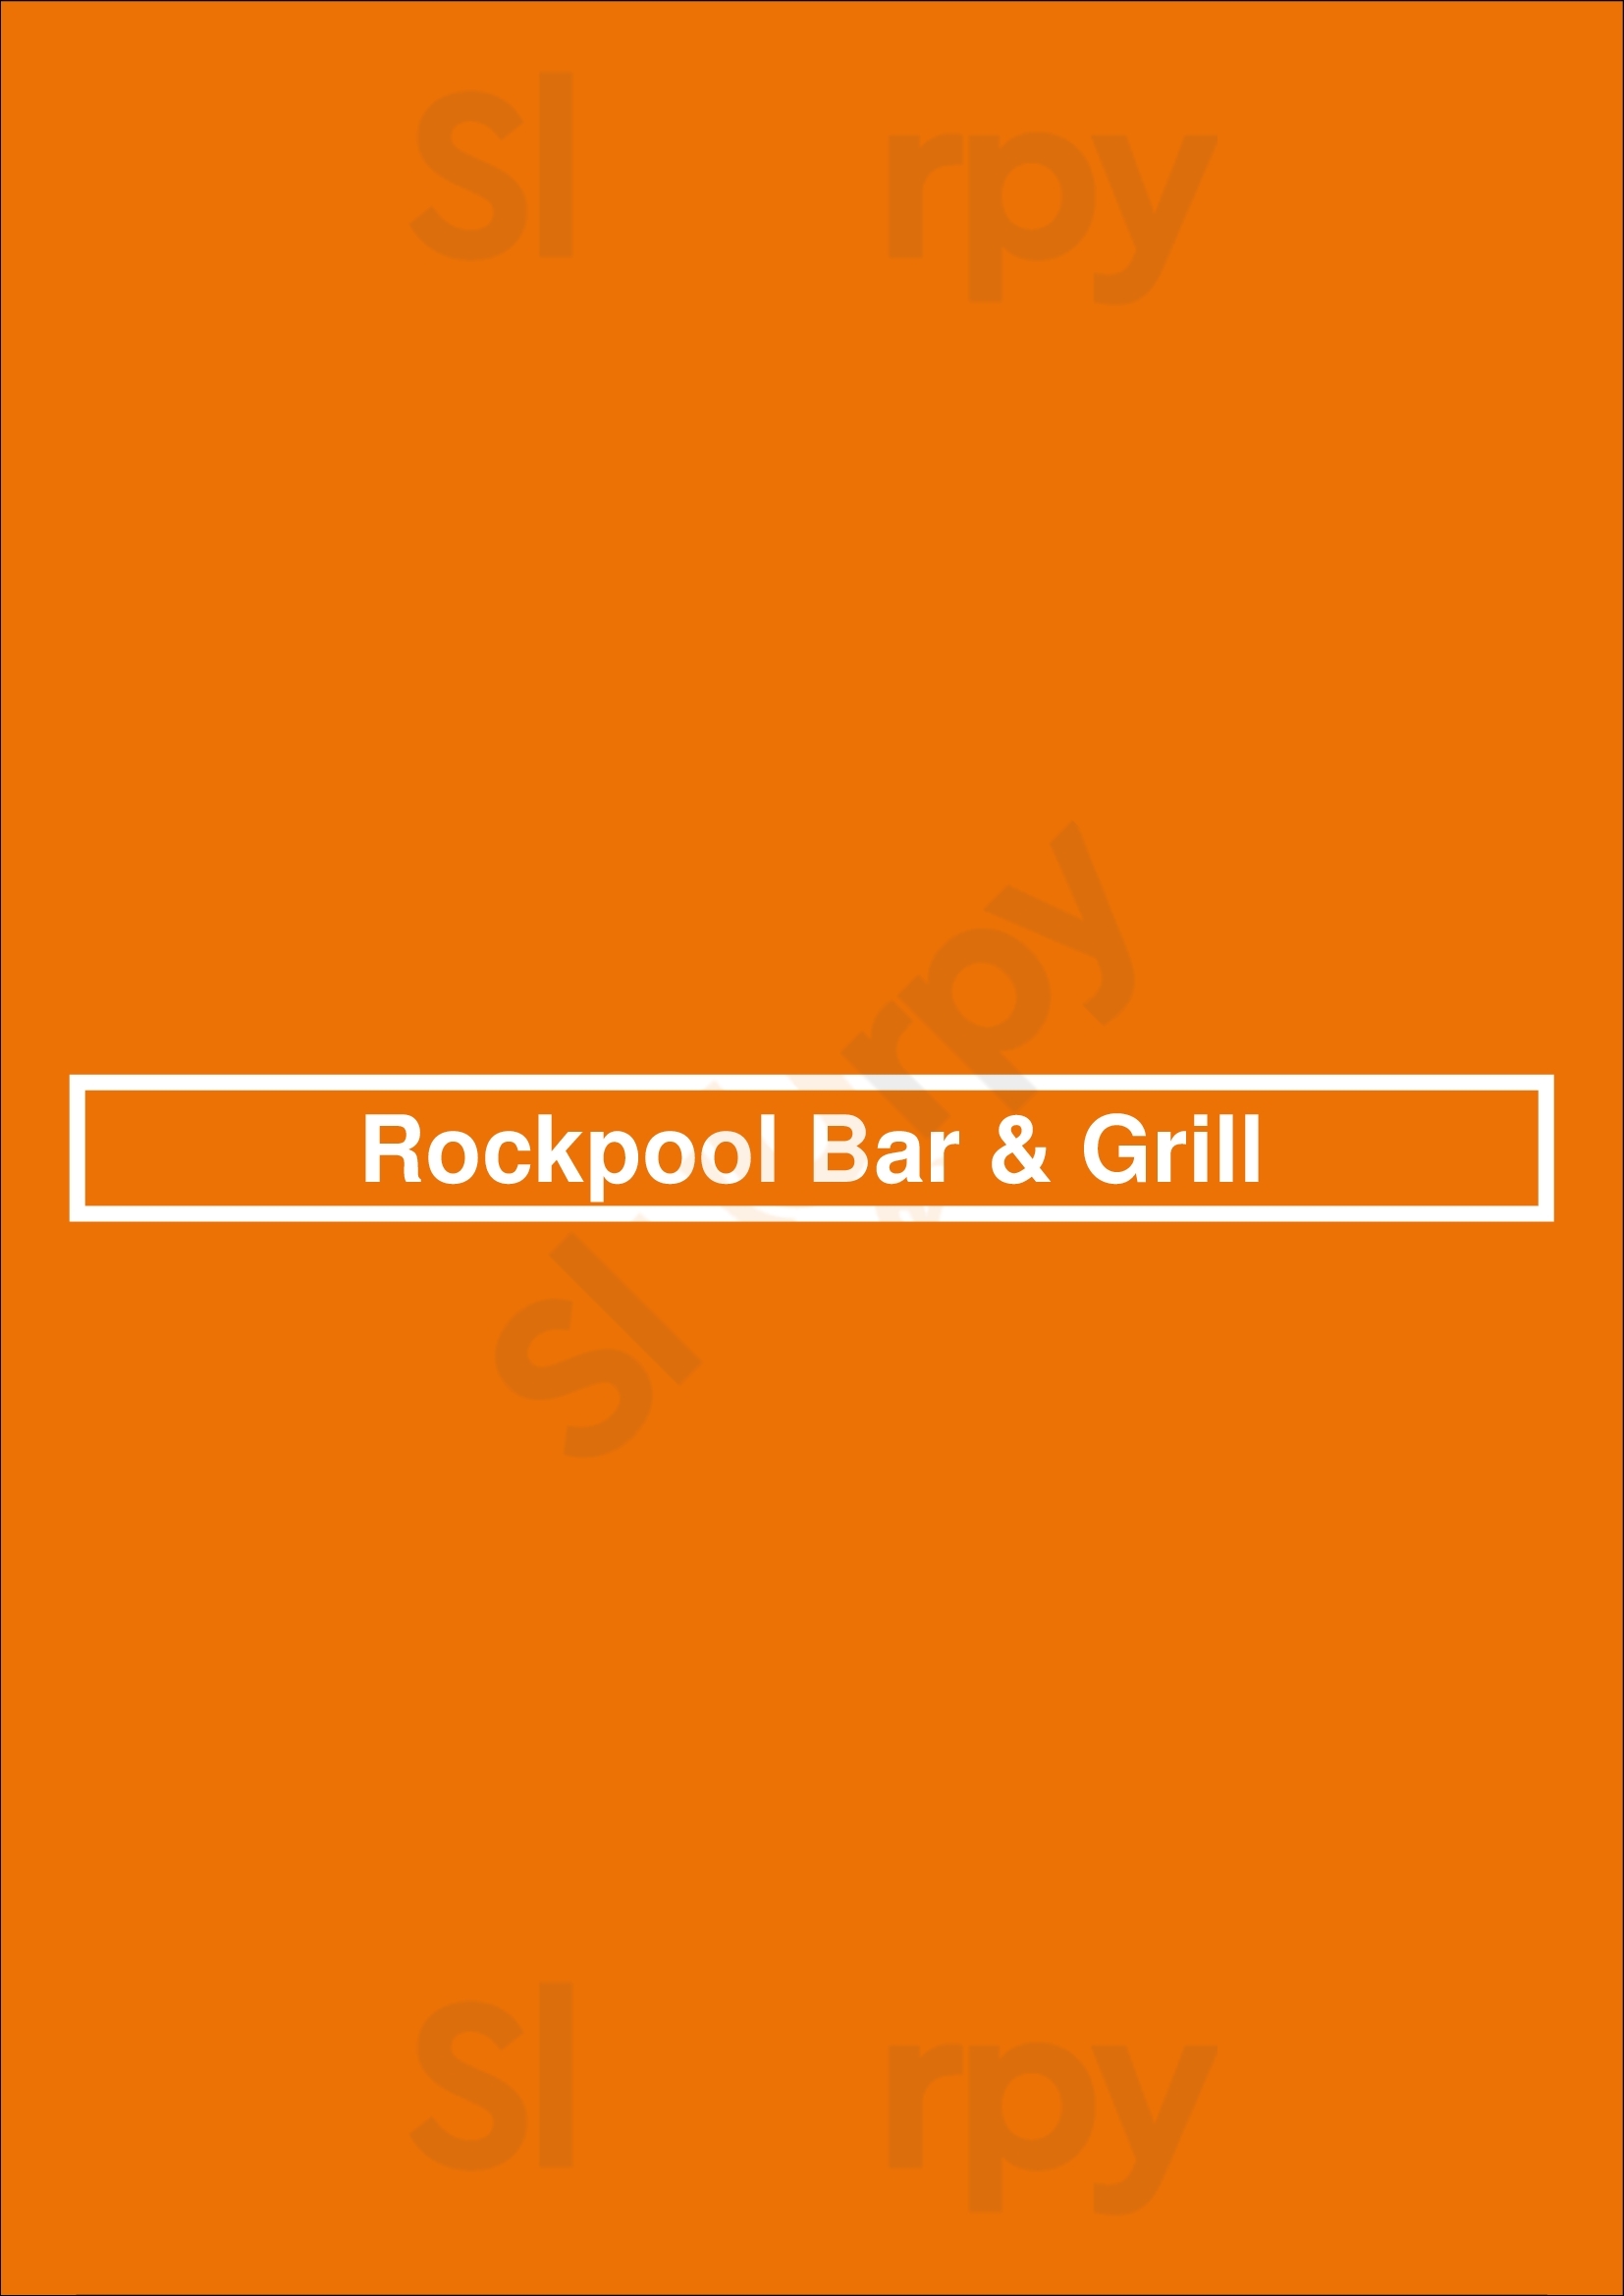 Rockpool Bar & Grill Melbourne Menu - 1